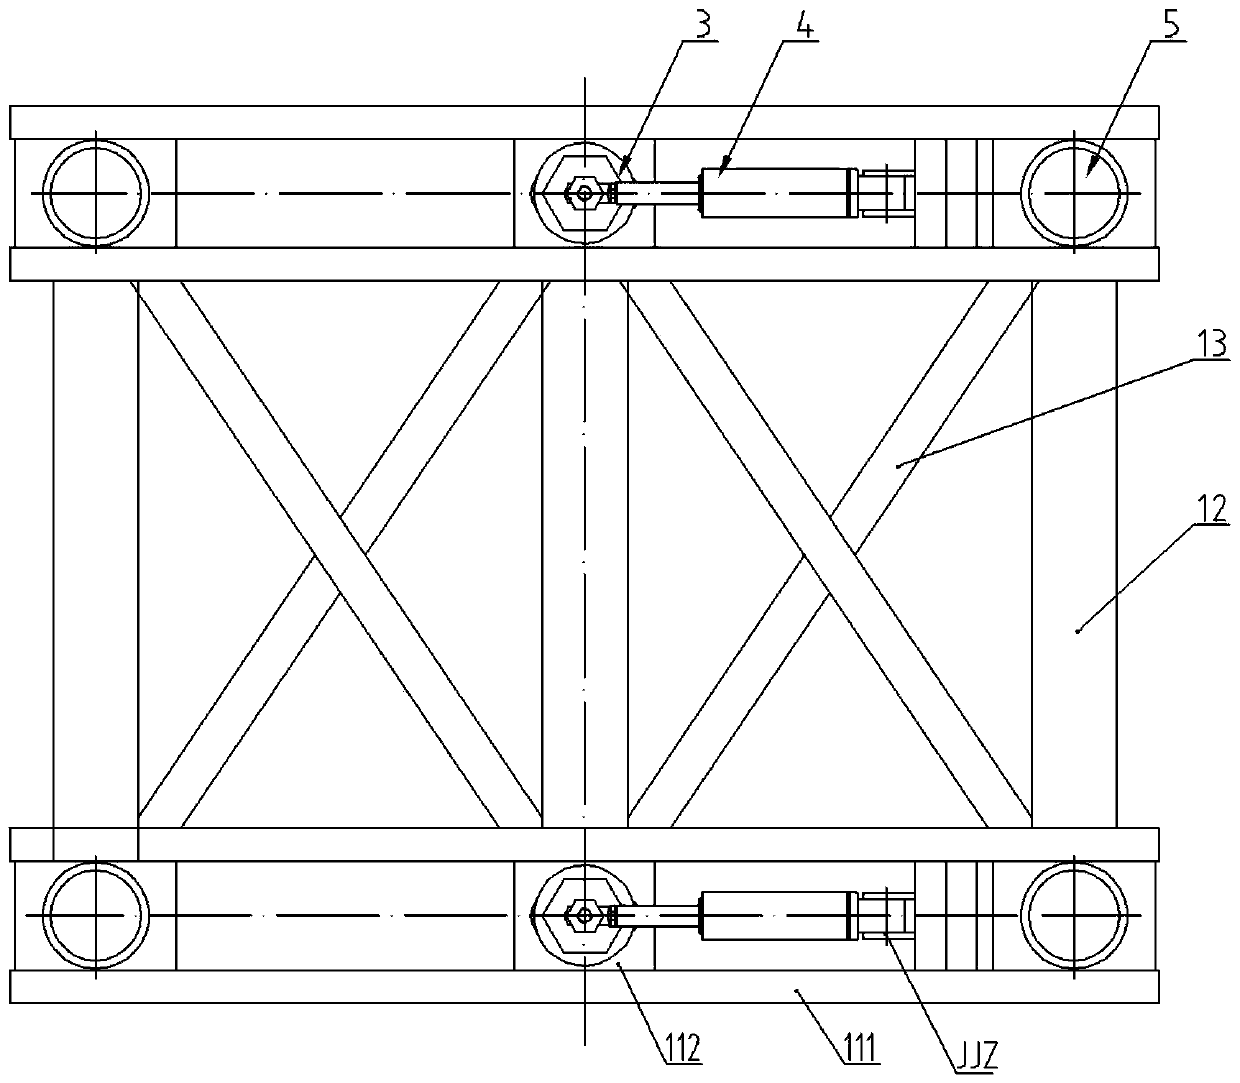 Bottom die trolley of short-line matching prefabricated box girder